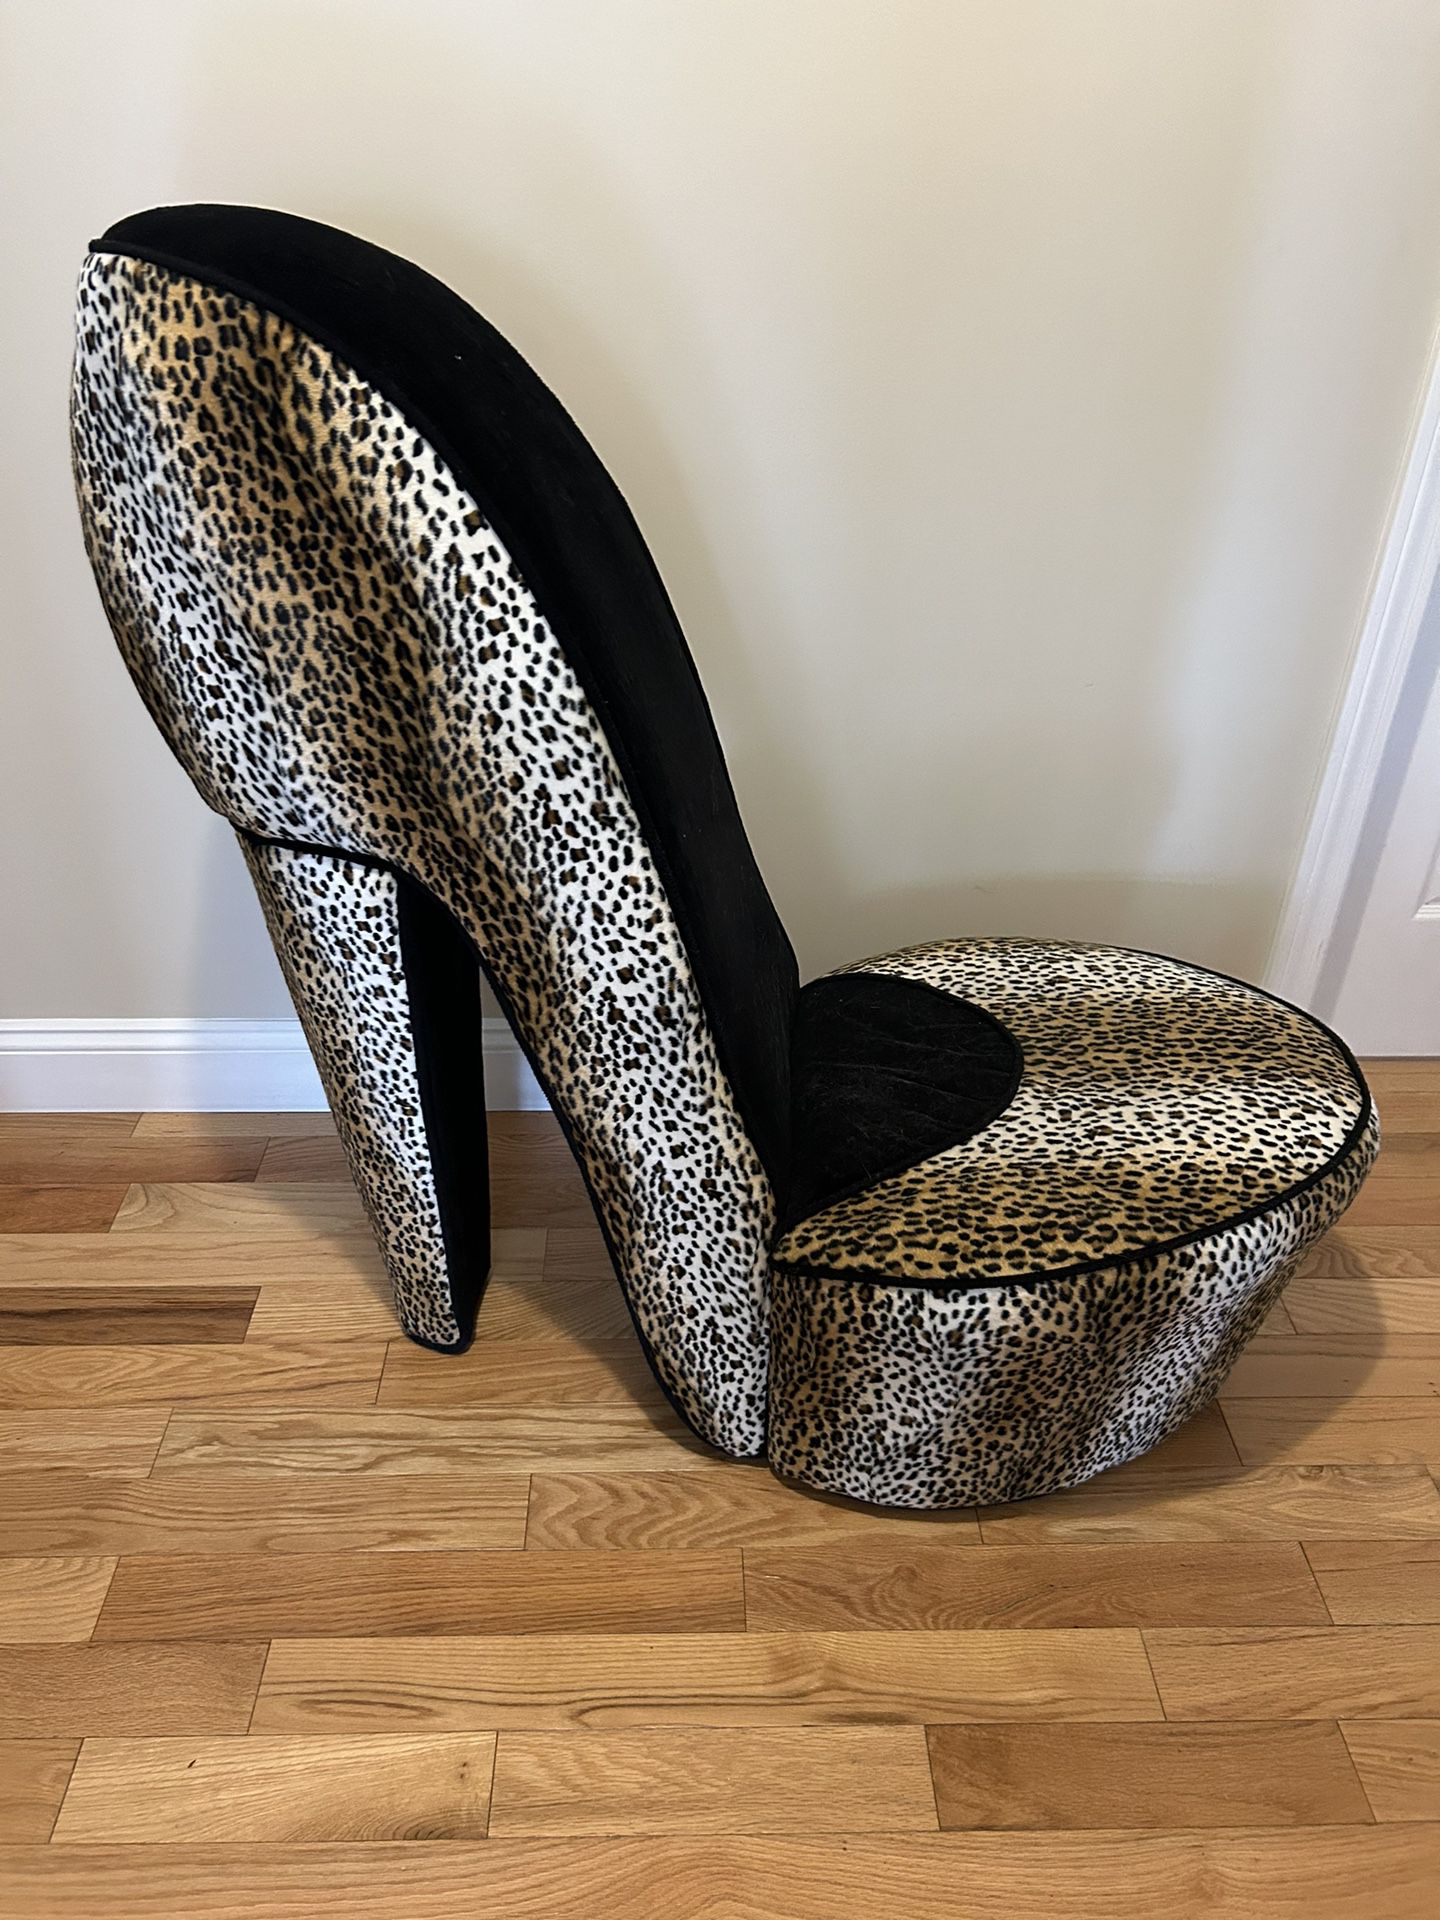 Vintage Cheetah Print High heel Chair Shoe Stiletto